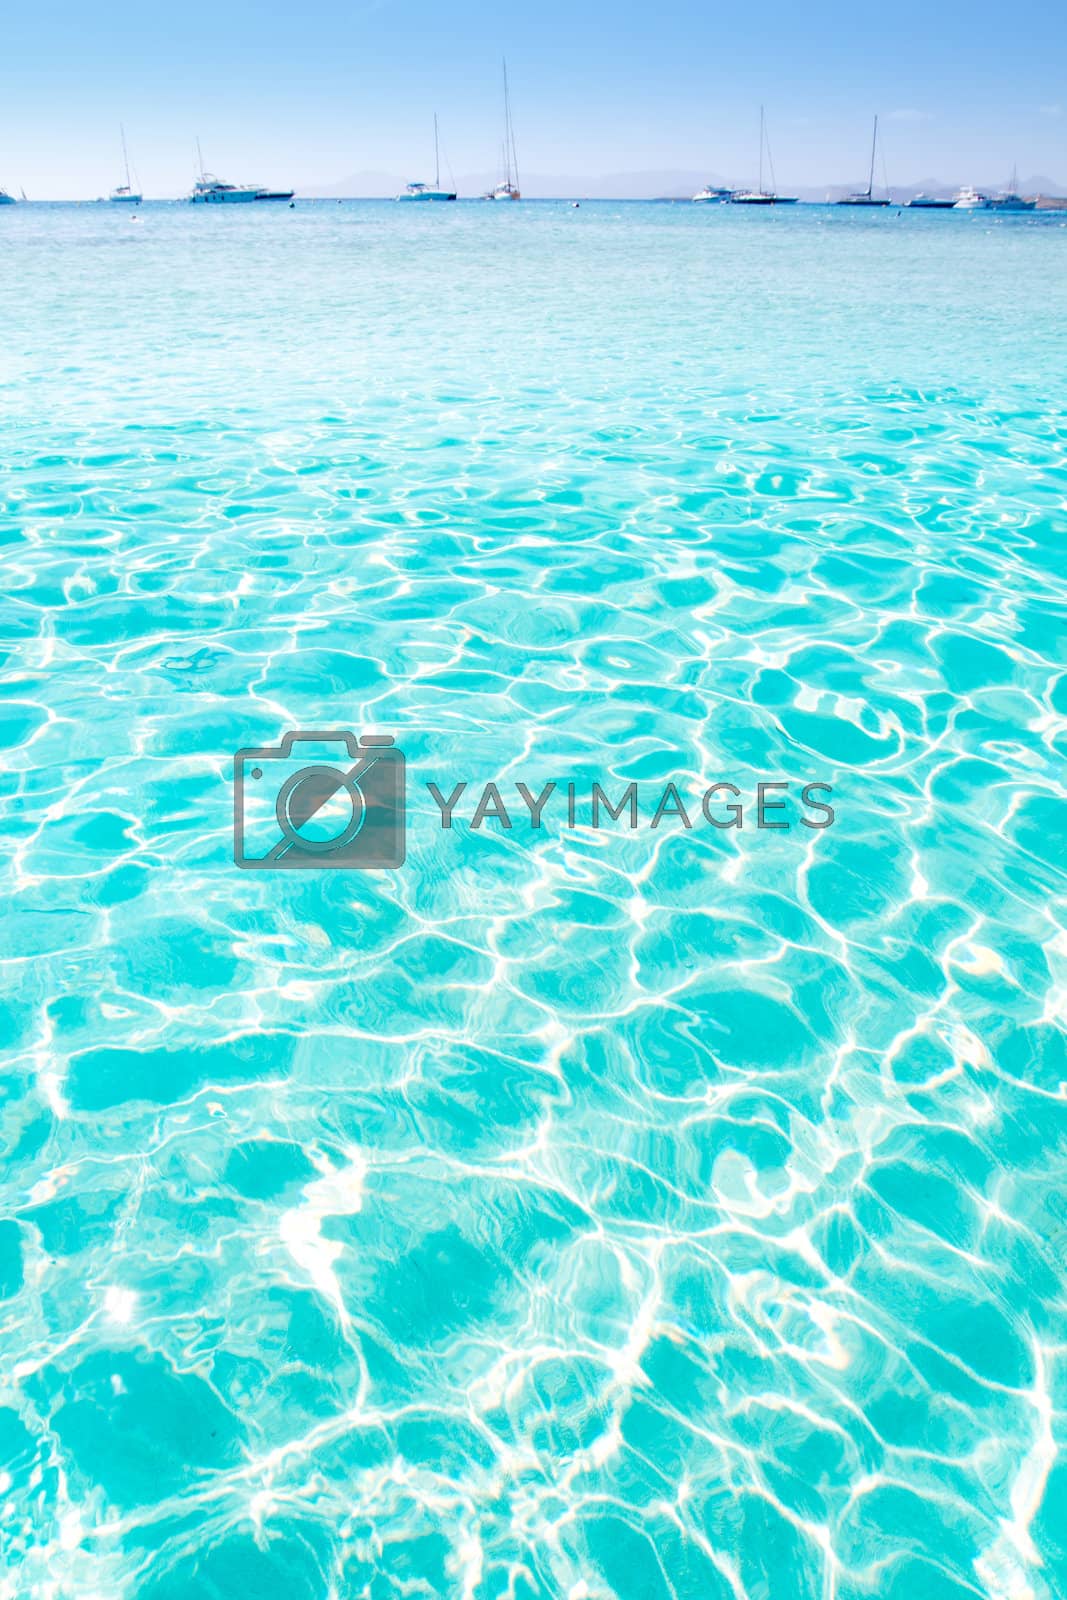 Royalty free image of blue turquoise ripple Formentera water by lunamarina